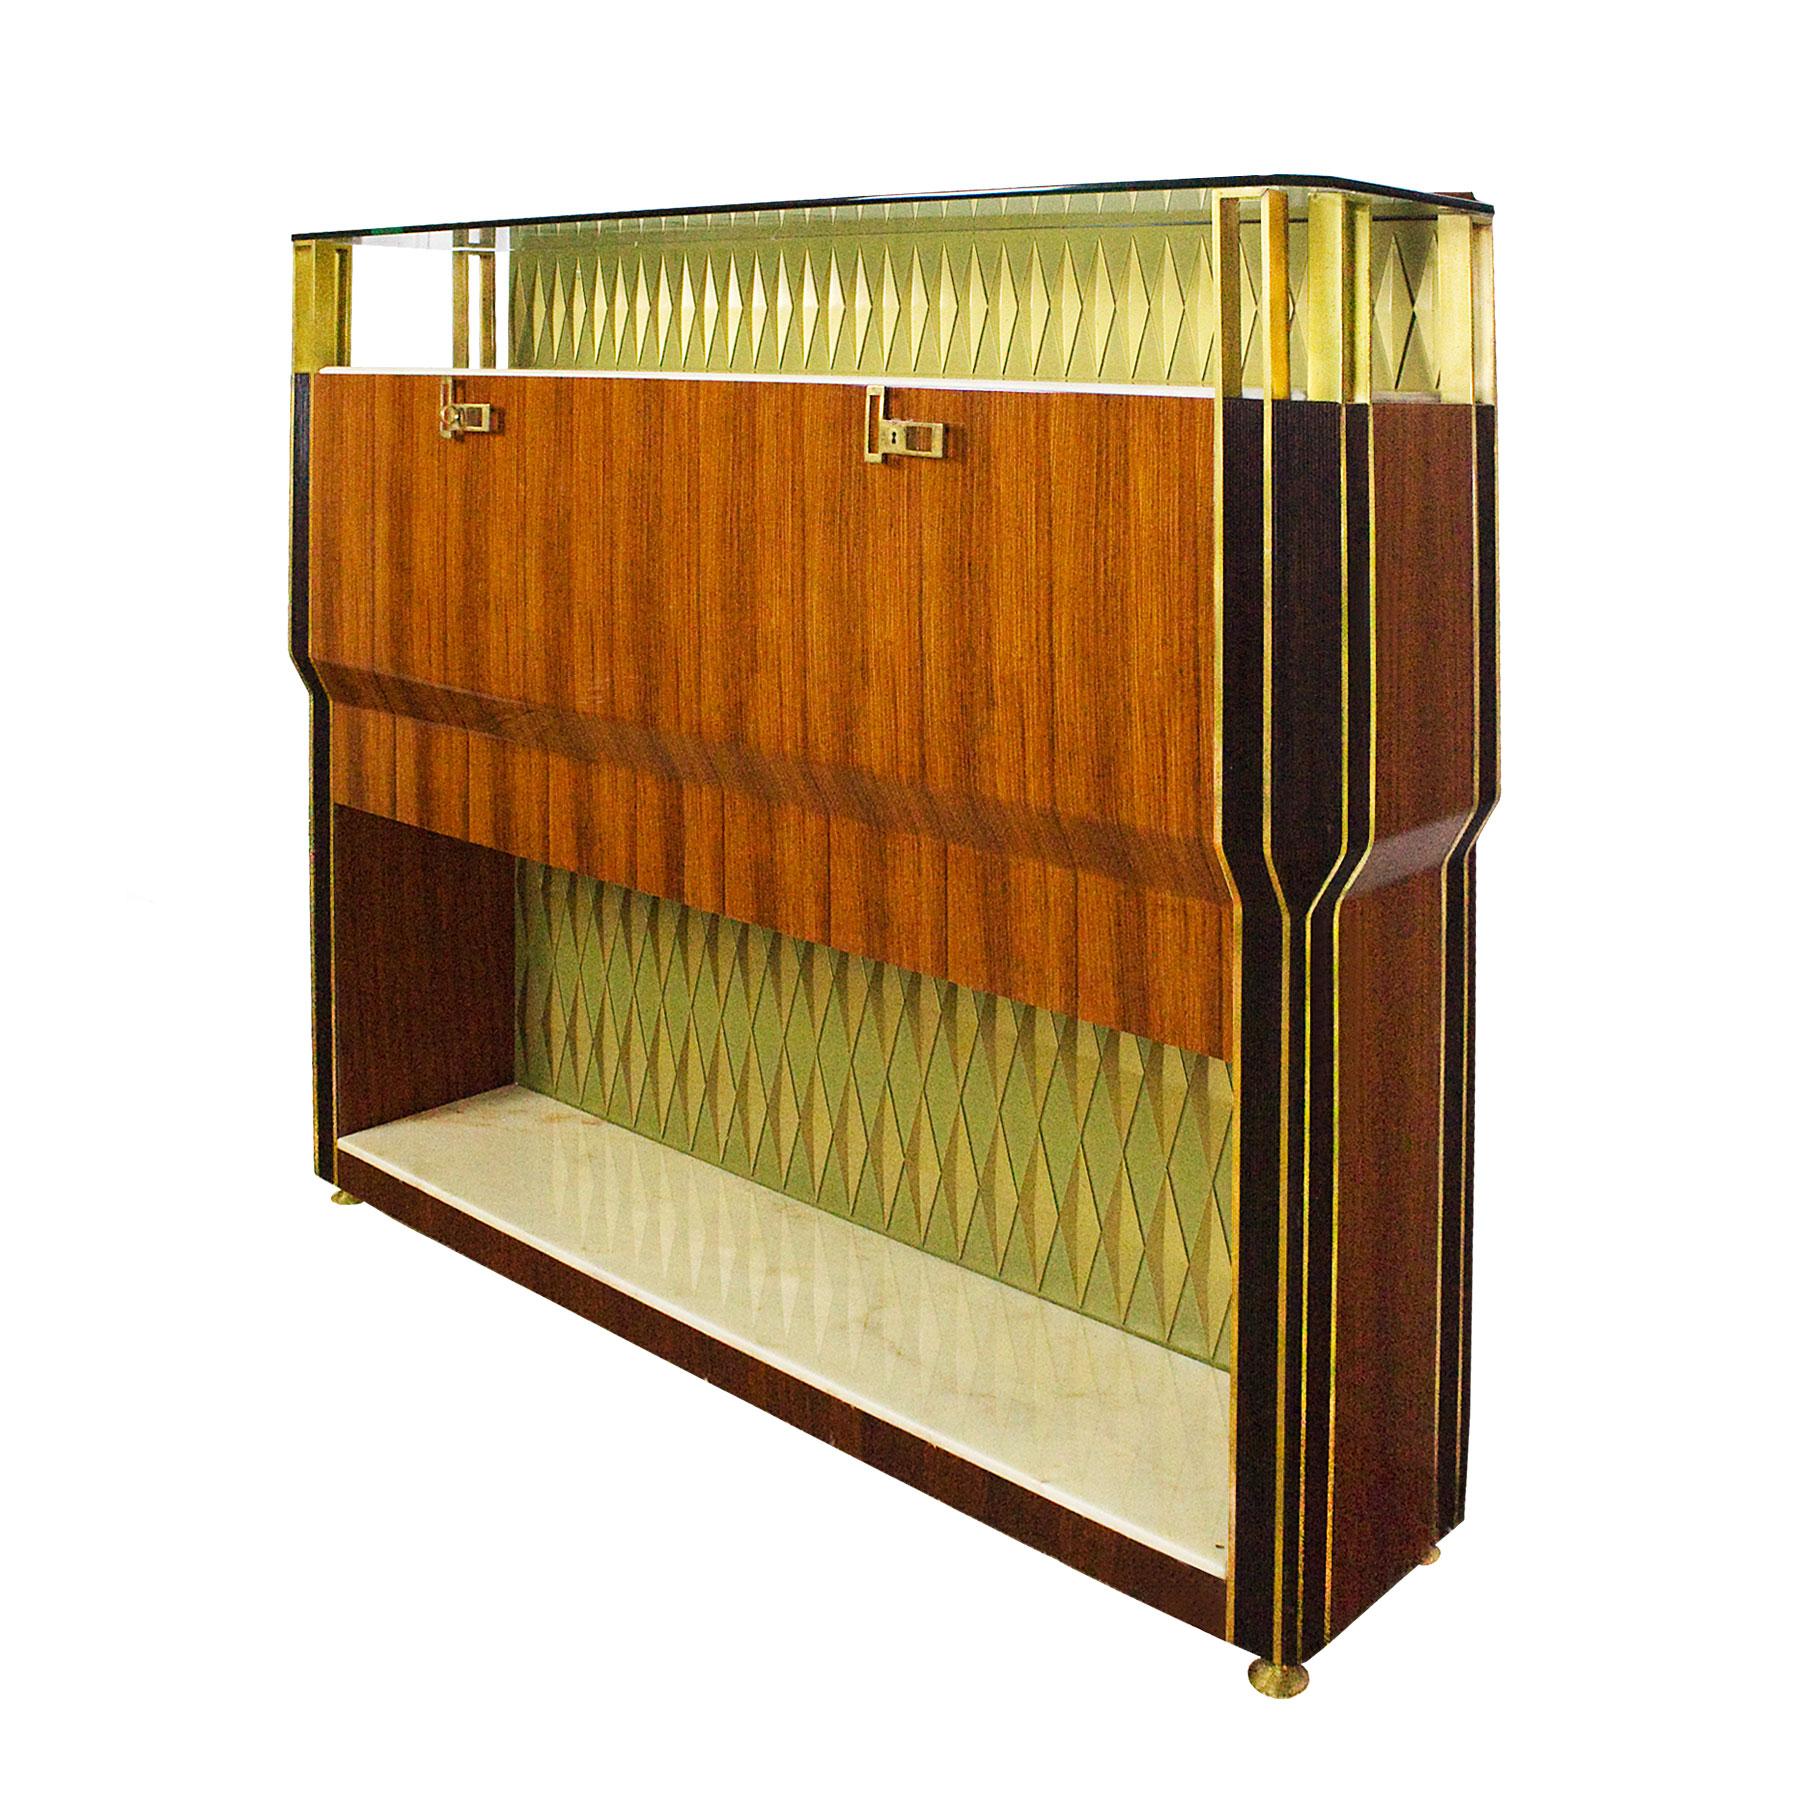 Important dry bar, solid wood and zebra wood veneer, 